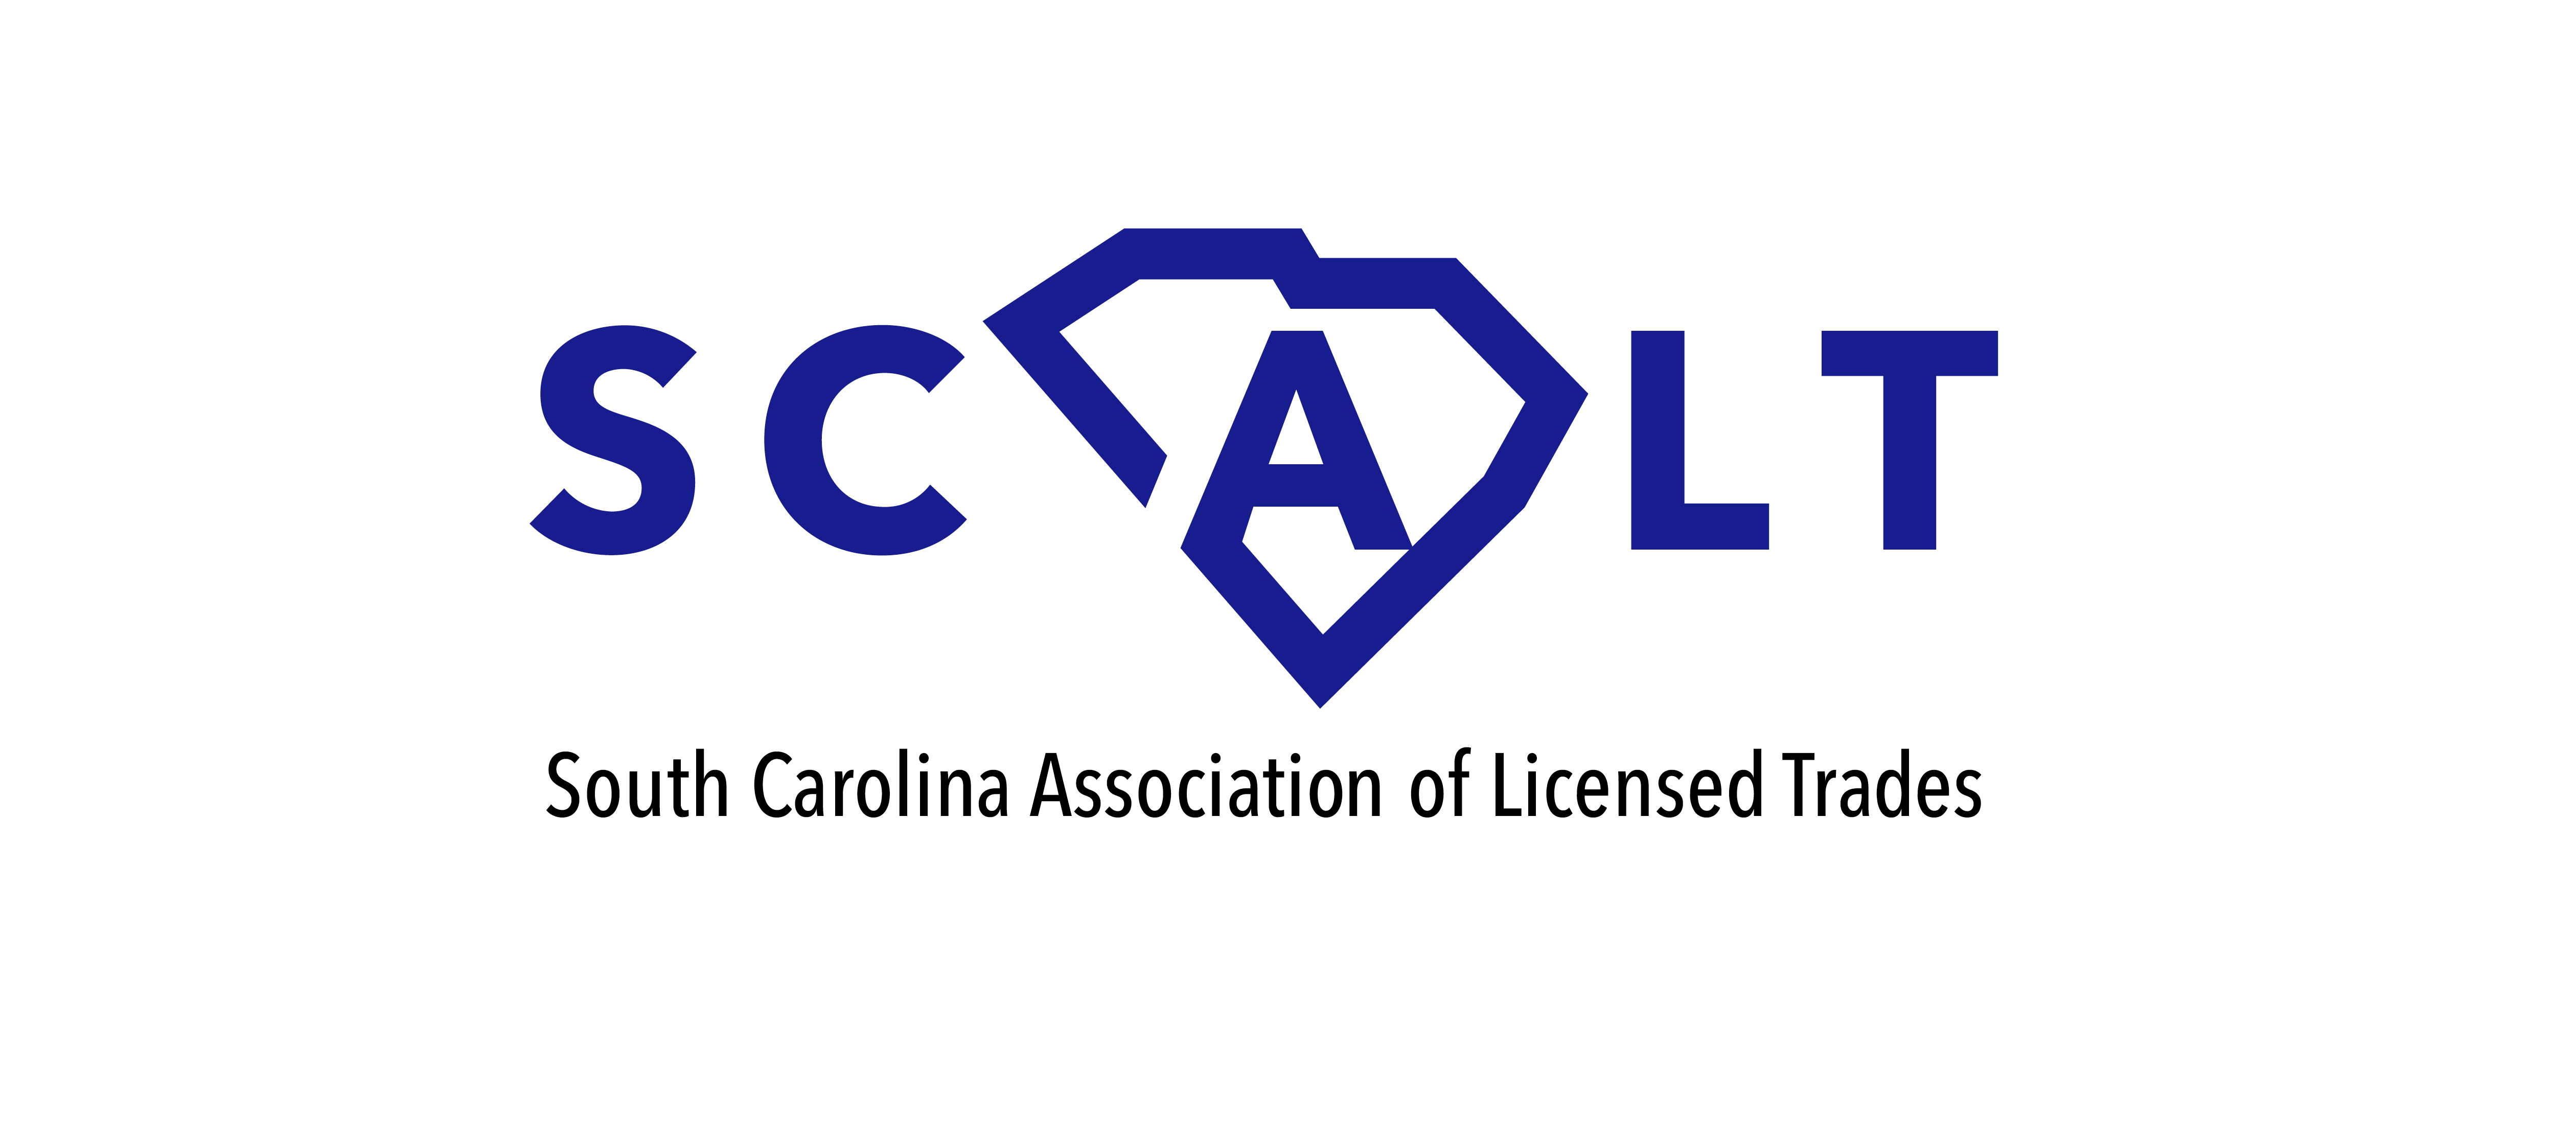 South Carolina Association of Licensed Trades